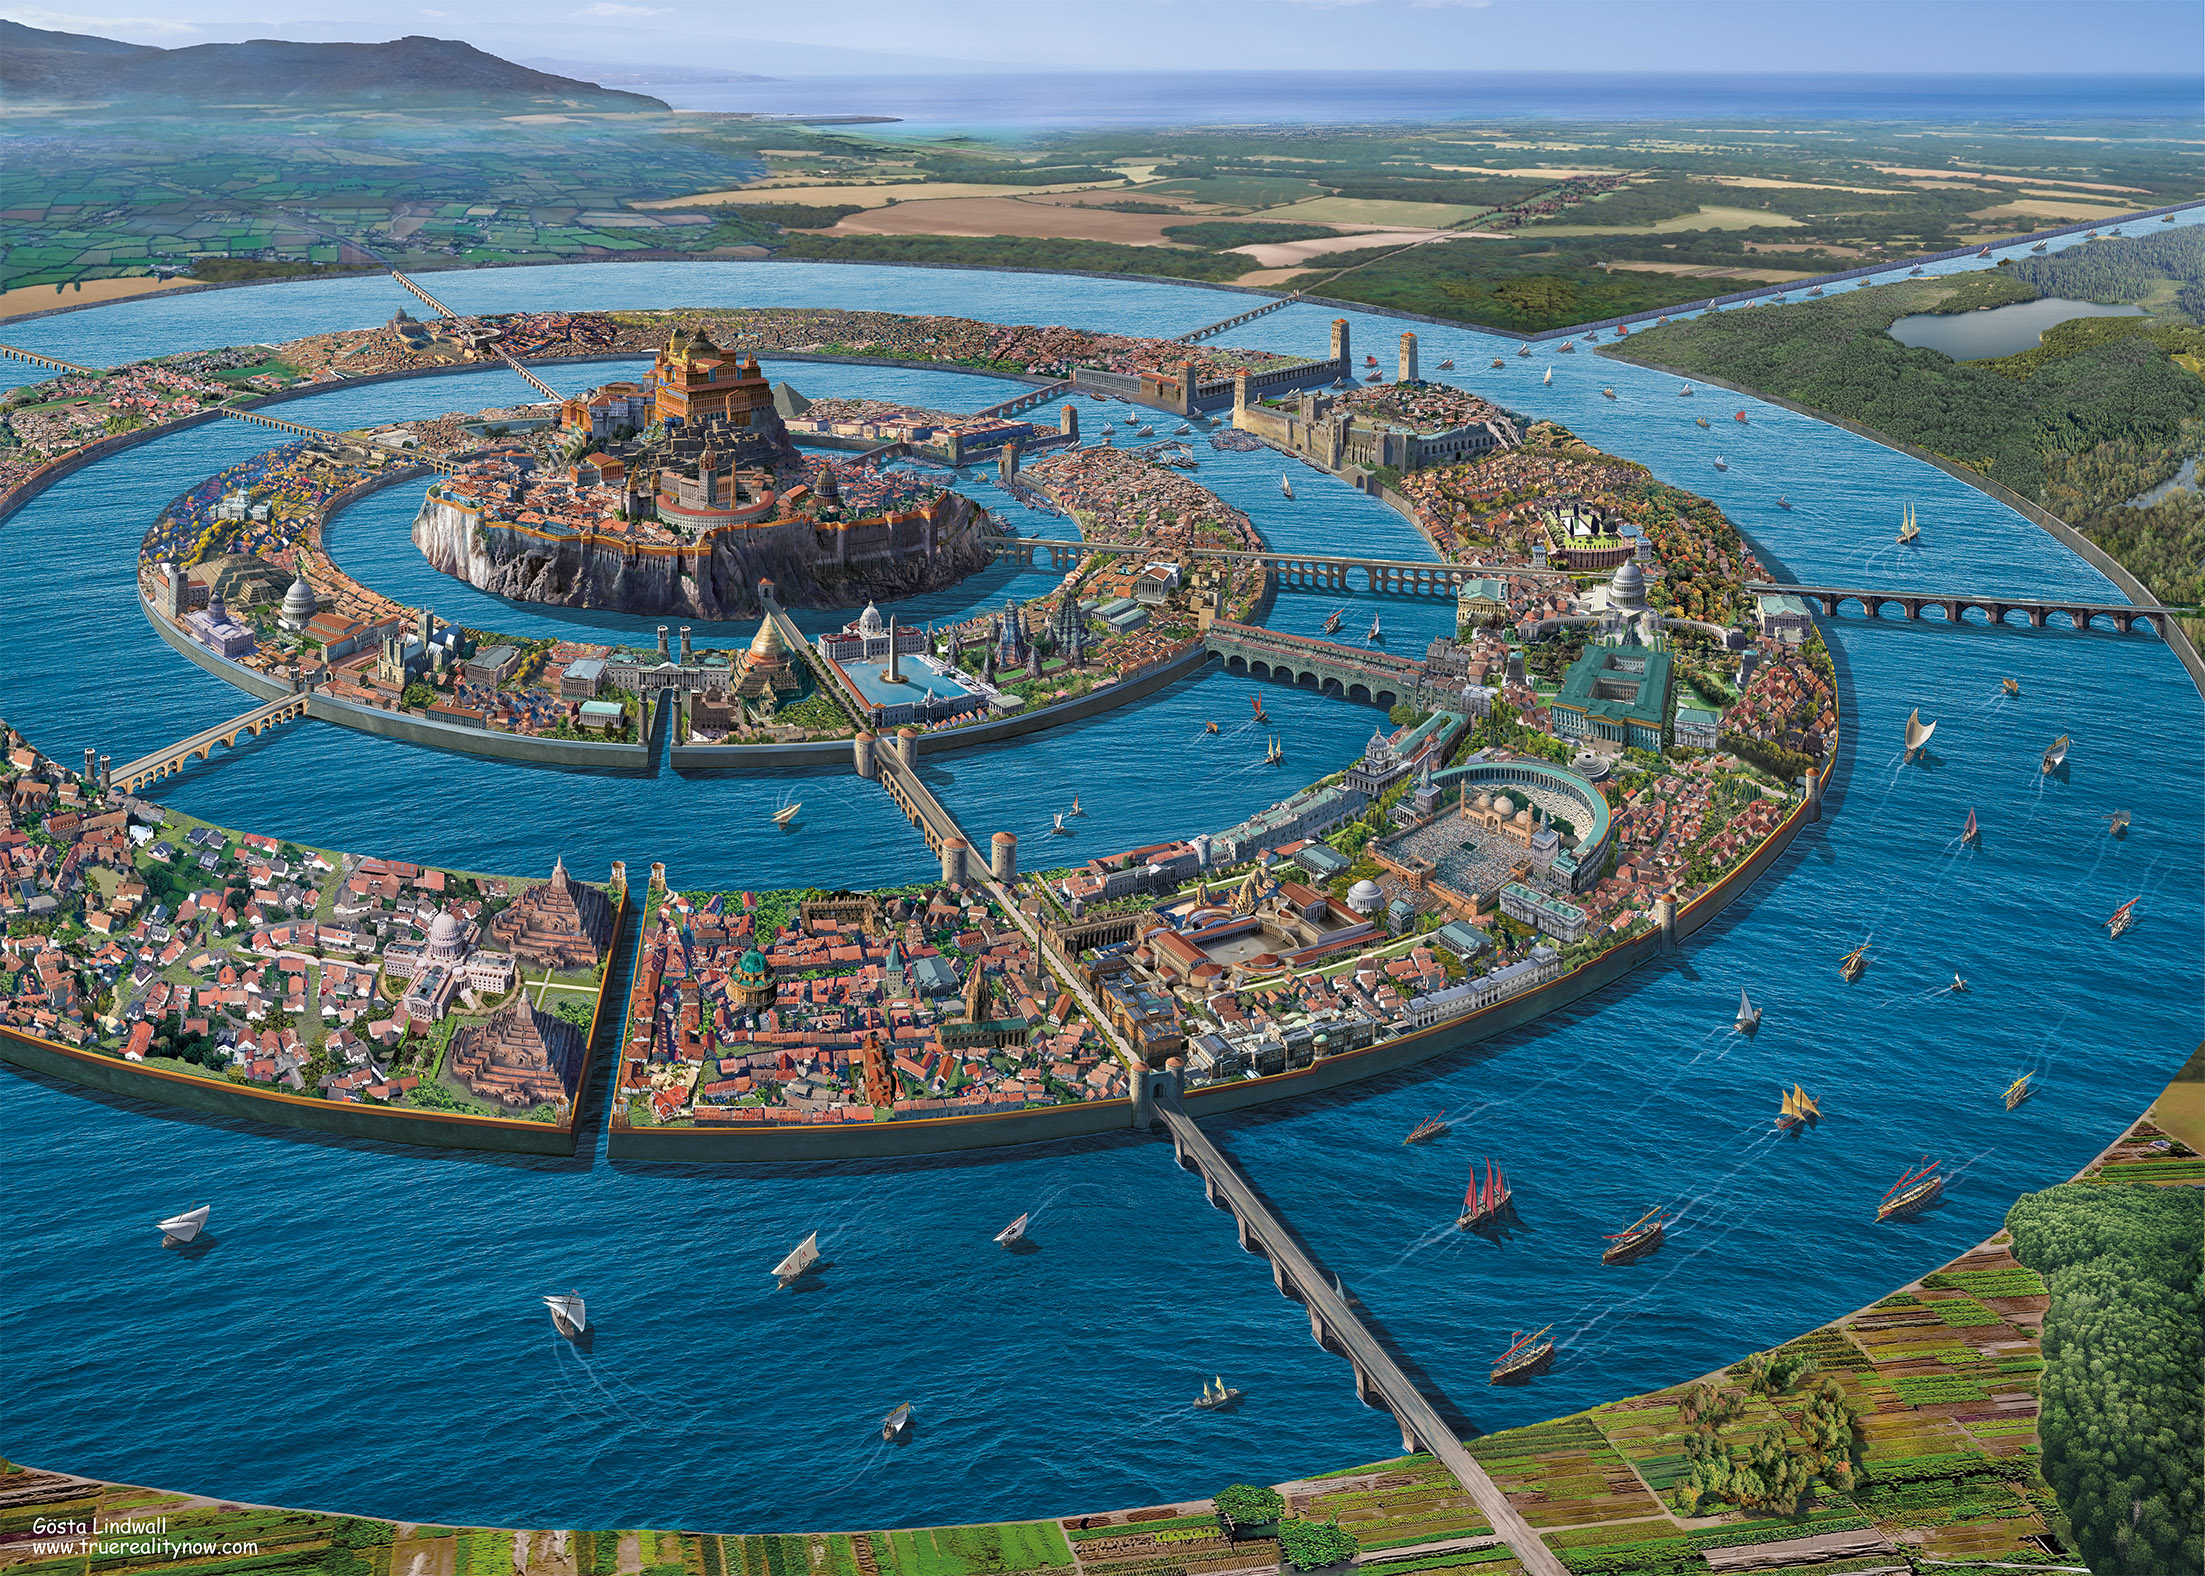 Illustration of Atlantis